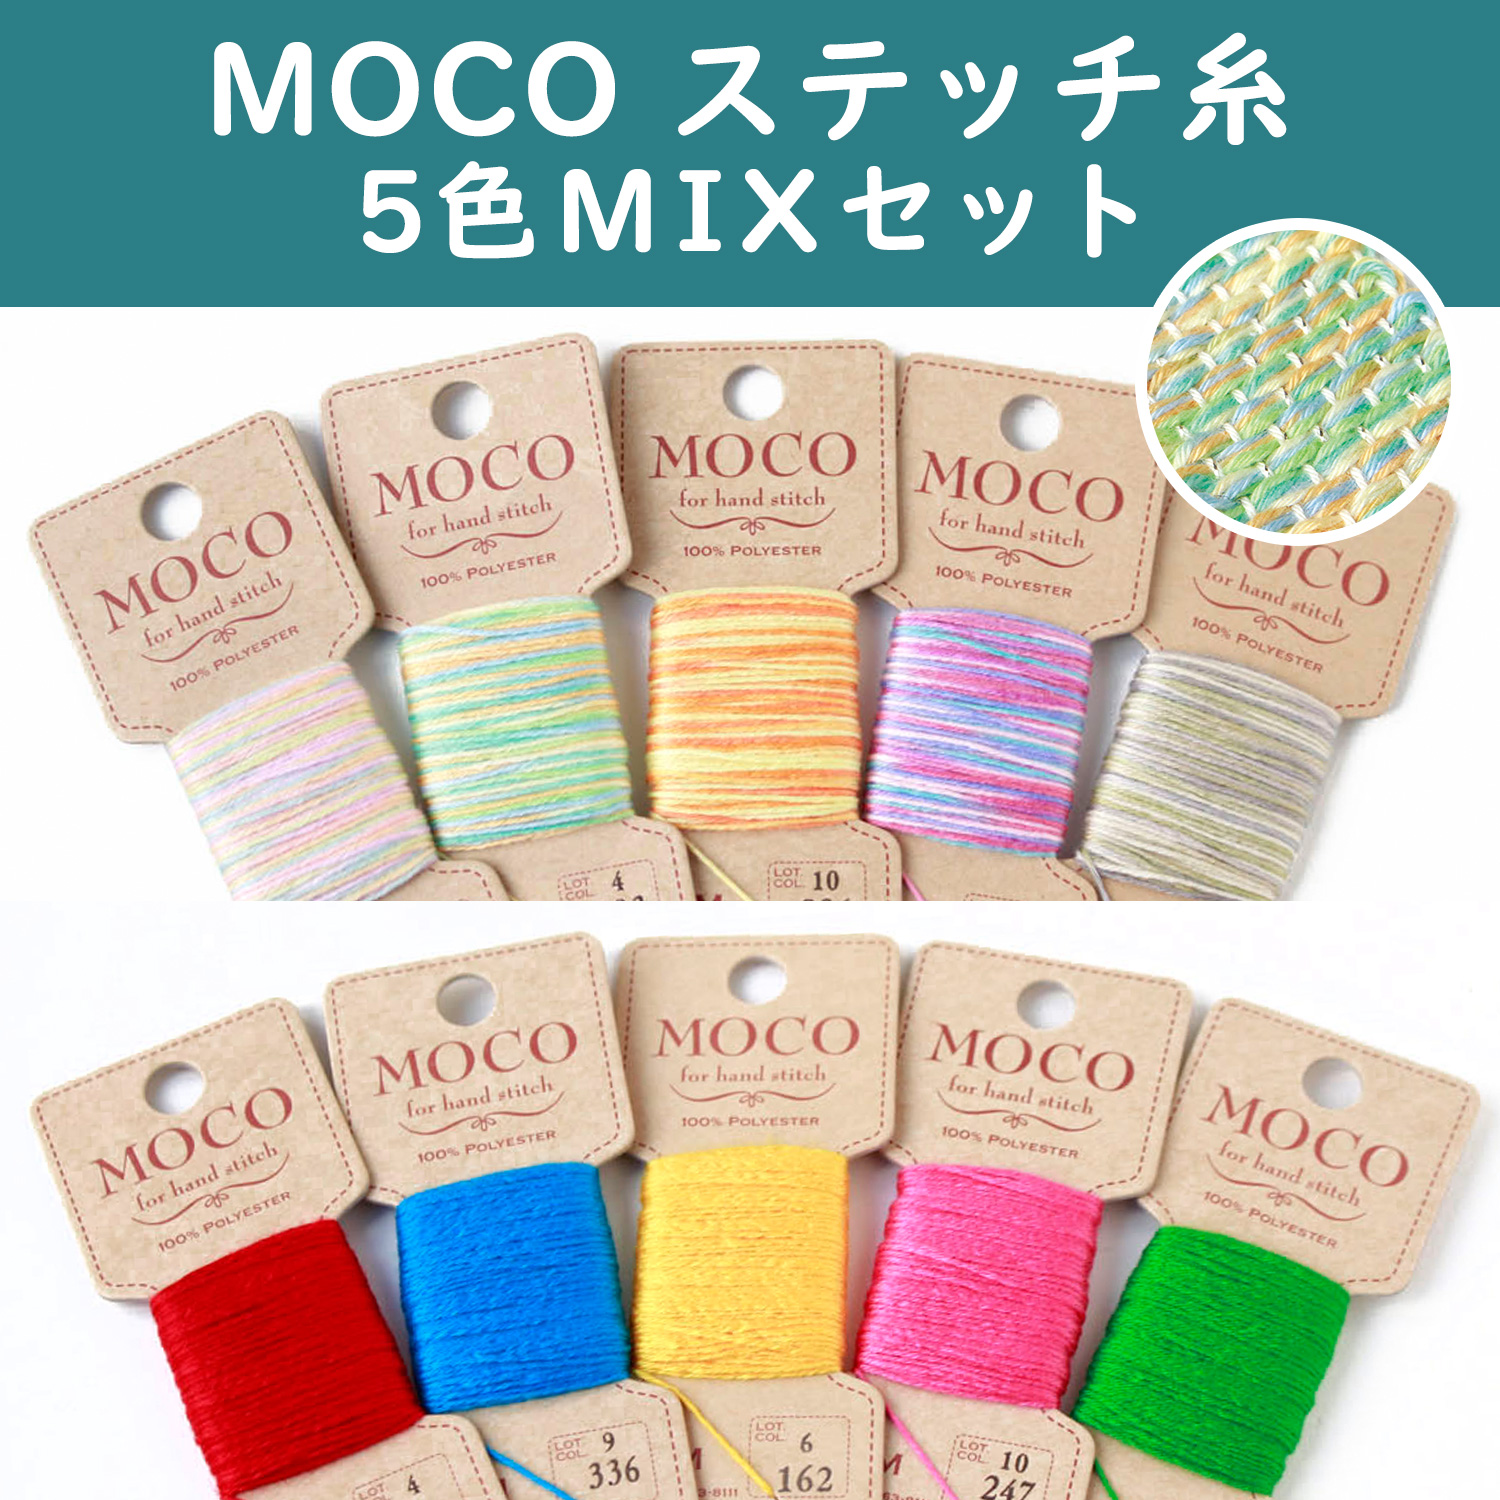 MOCO ステッチ糸 MIXセット #20×10m巻 各5色セット (袋)